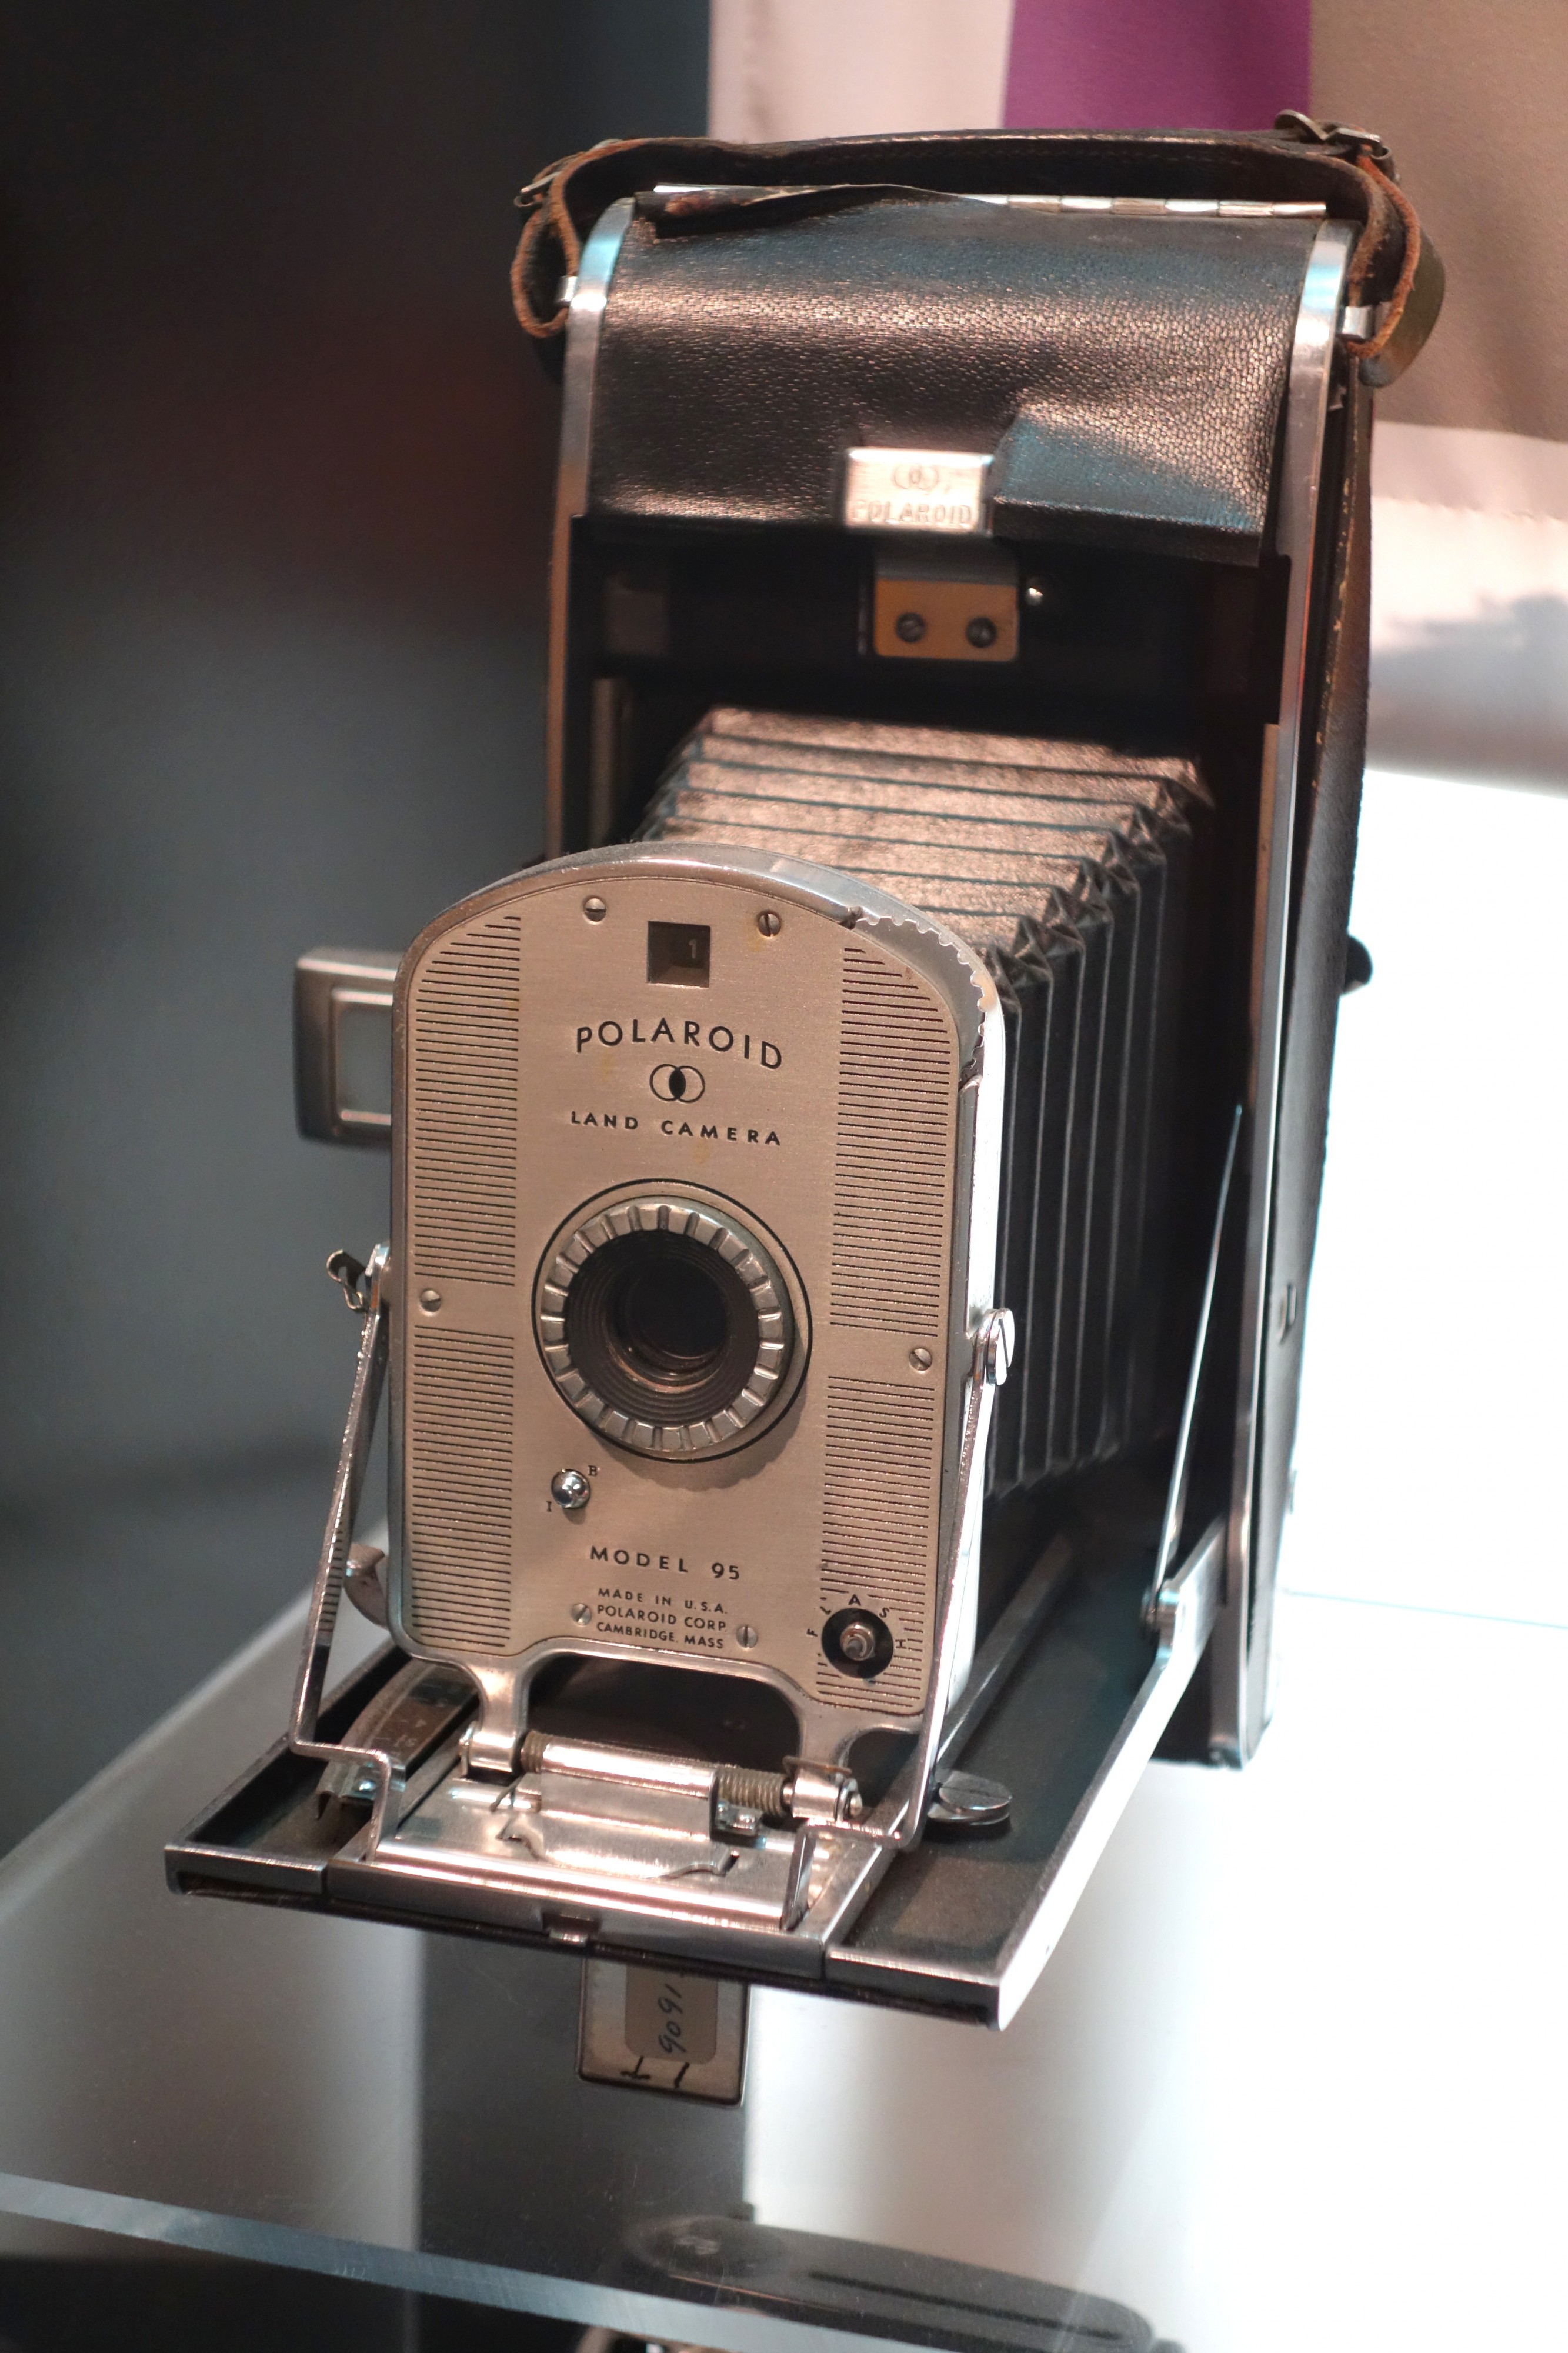 Polaroid Land Camera Model 95 - MIT Museum - DSC03766